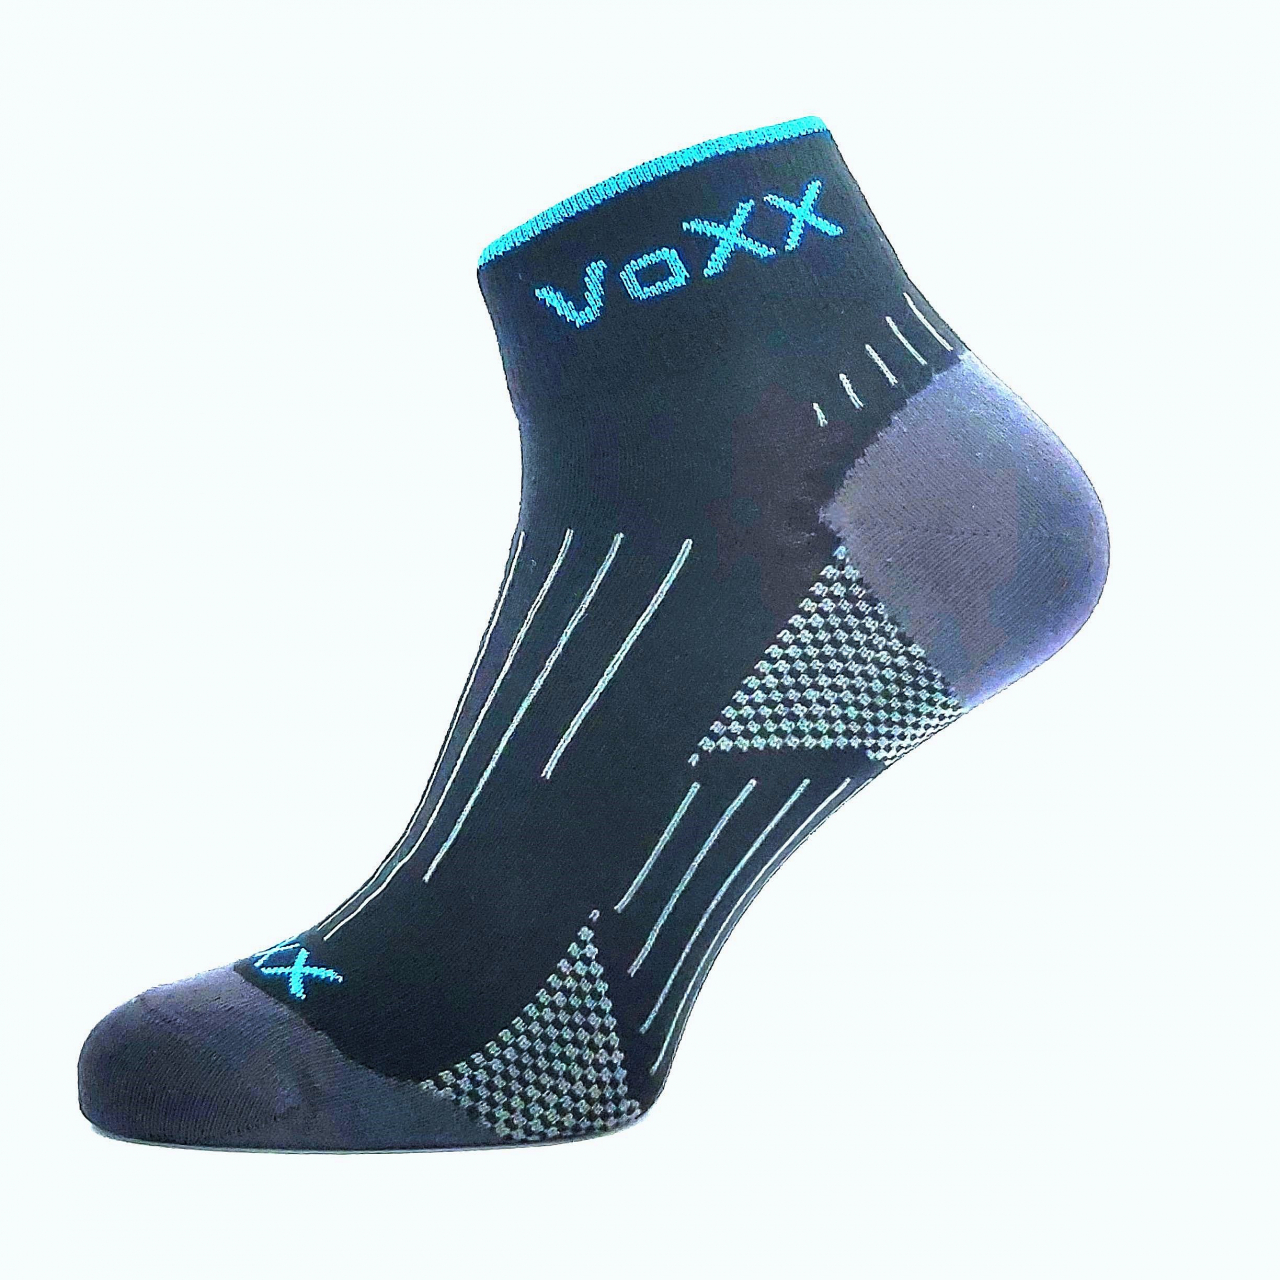 Ponožky tenké unisex Voxx Azul - černé, 35-38